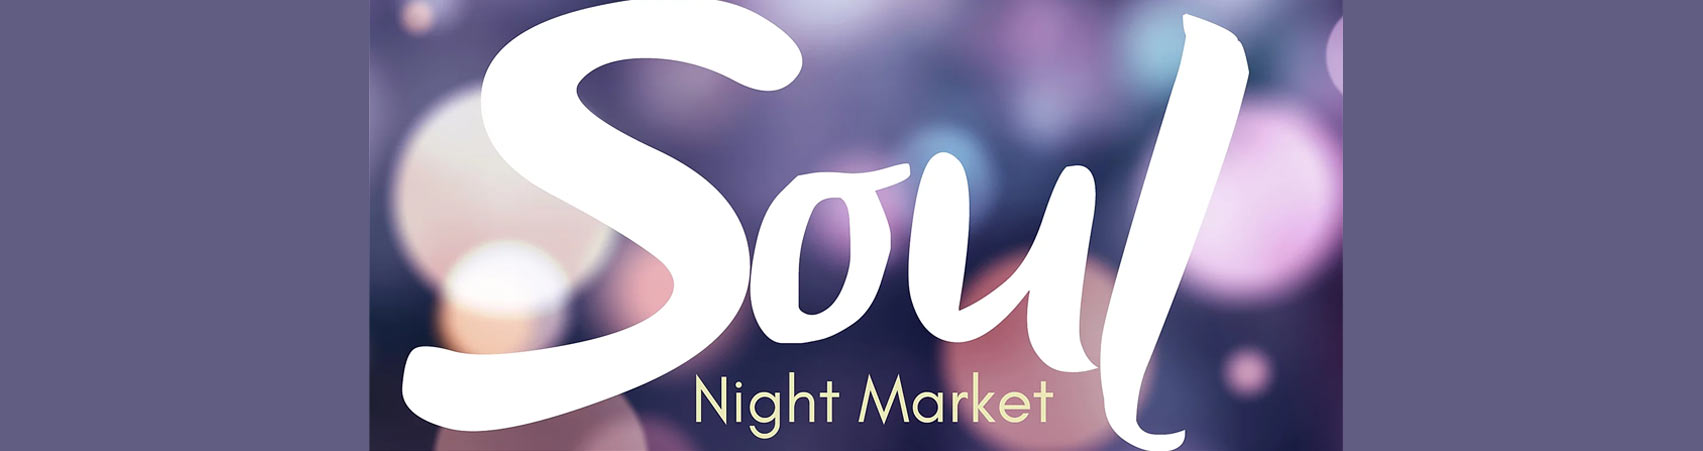 soul-night-market